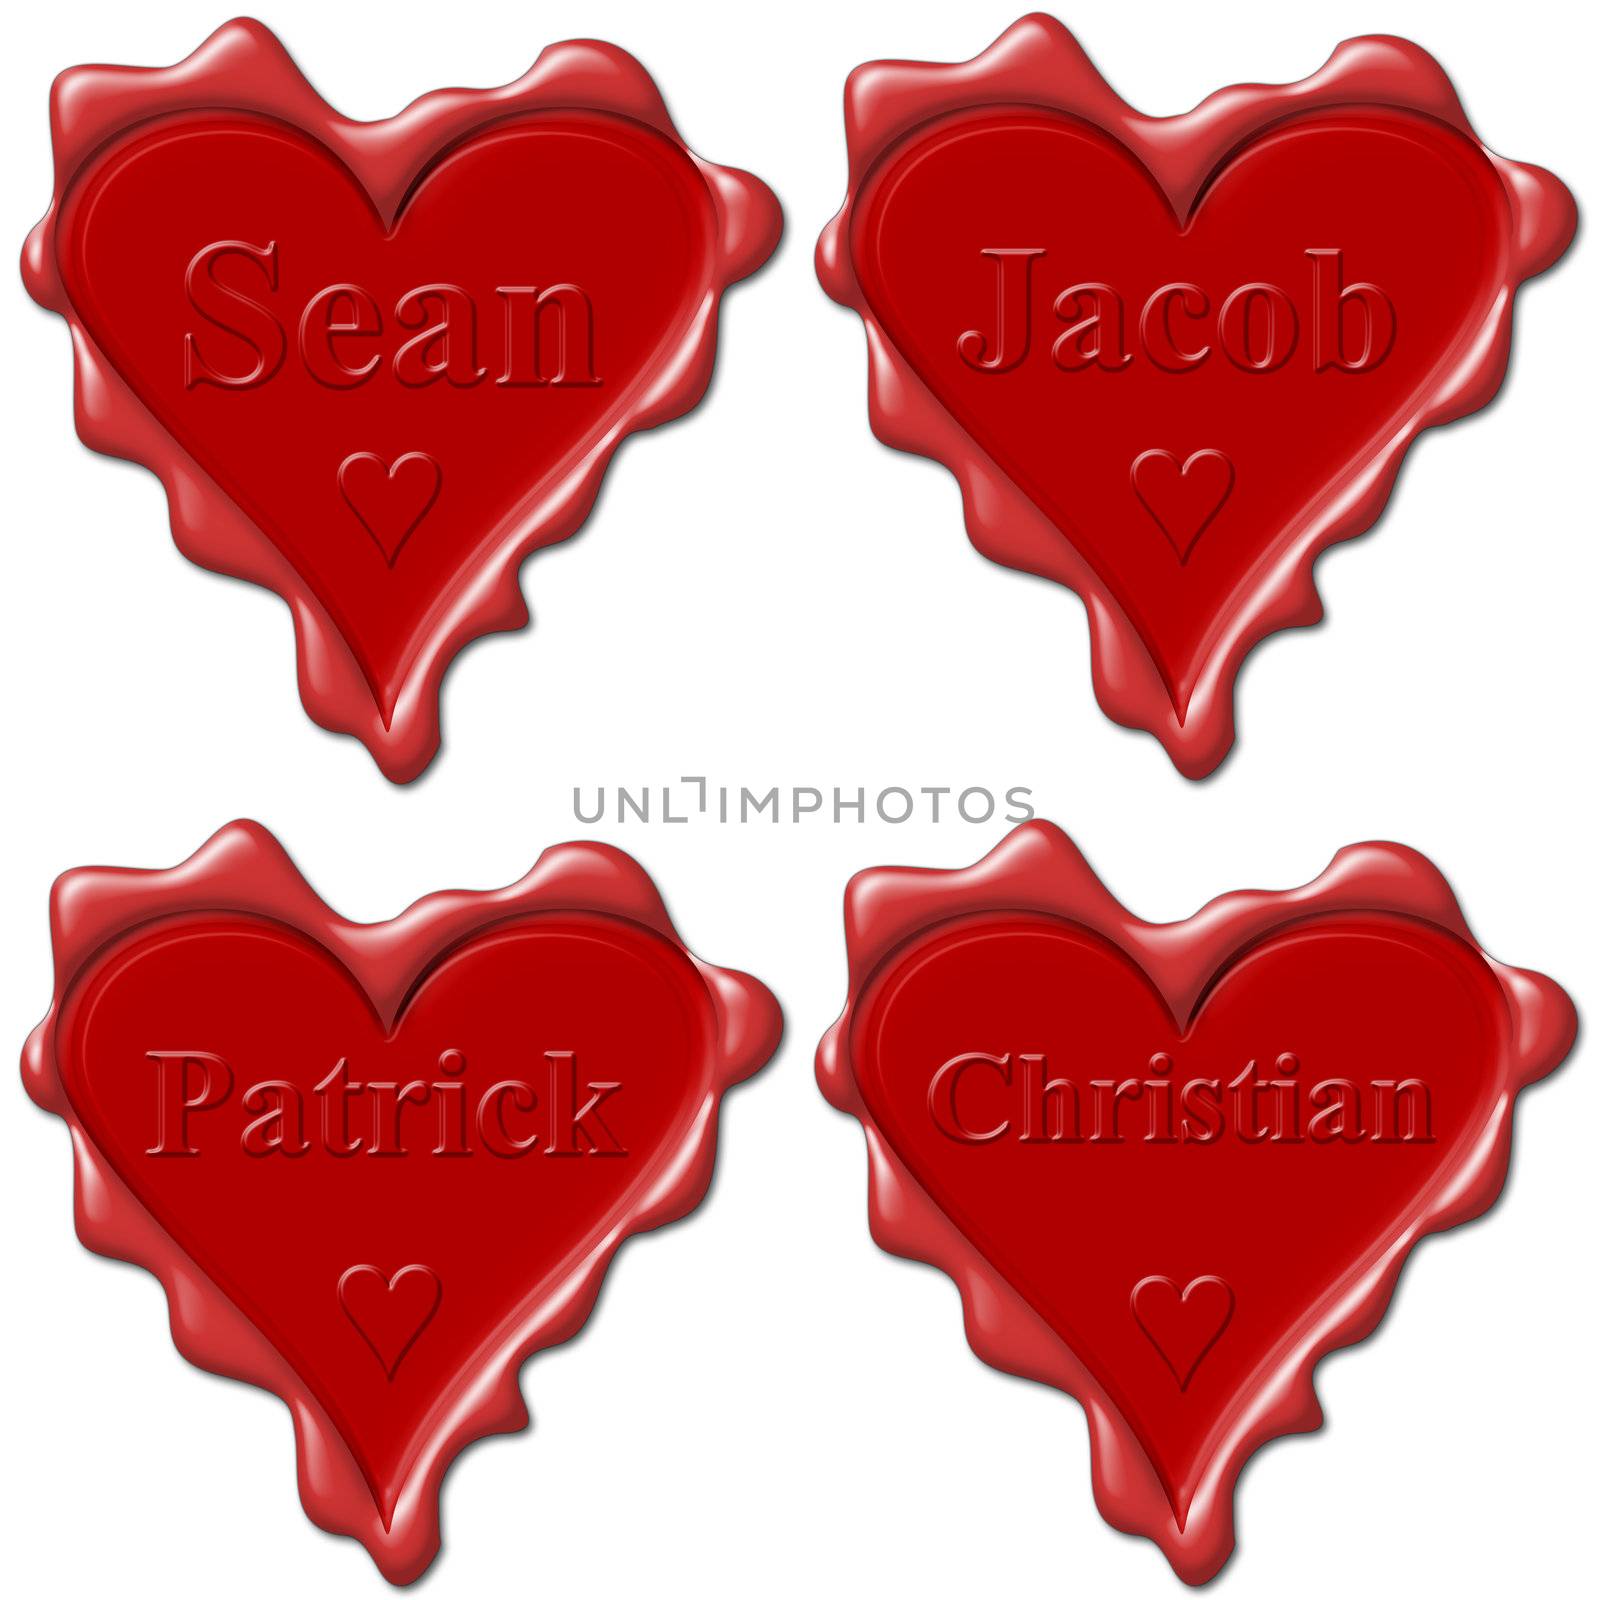 Valentine love hearts with names: Sean, Jacob, Patrick, Christia by mozzyb